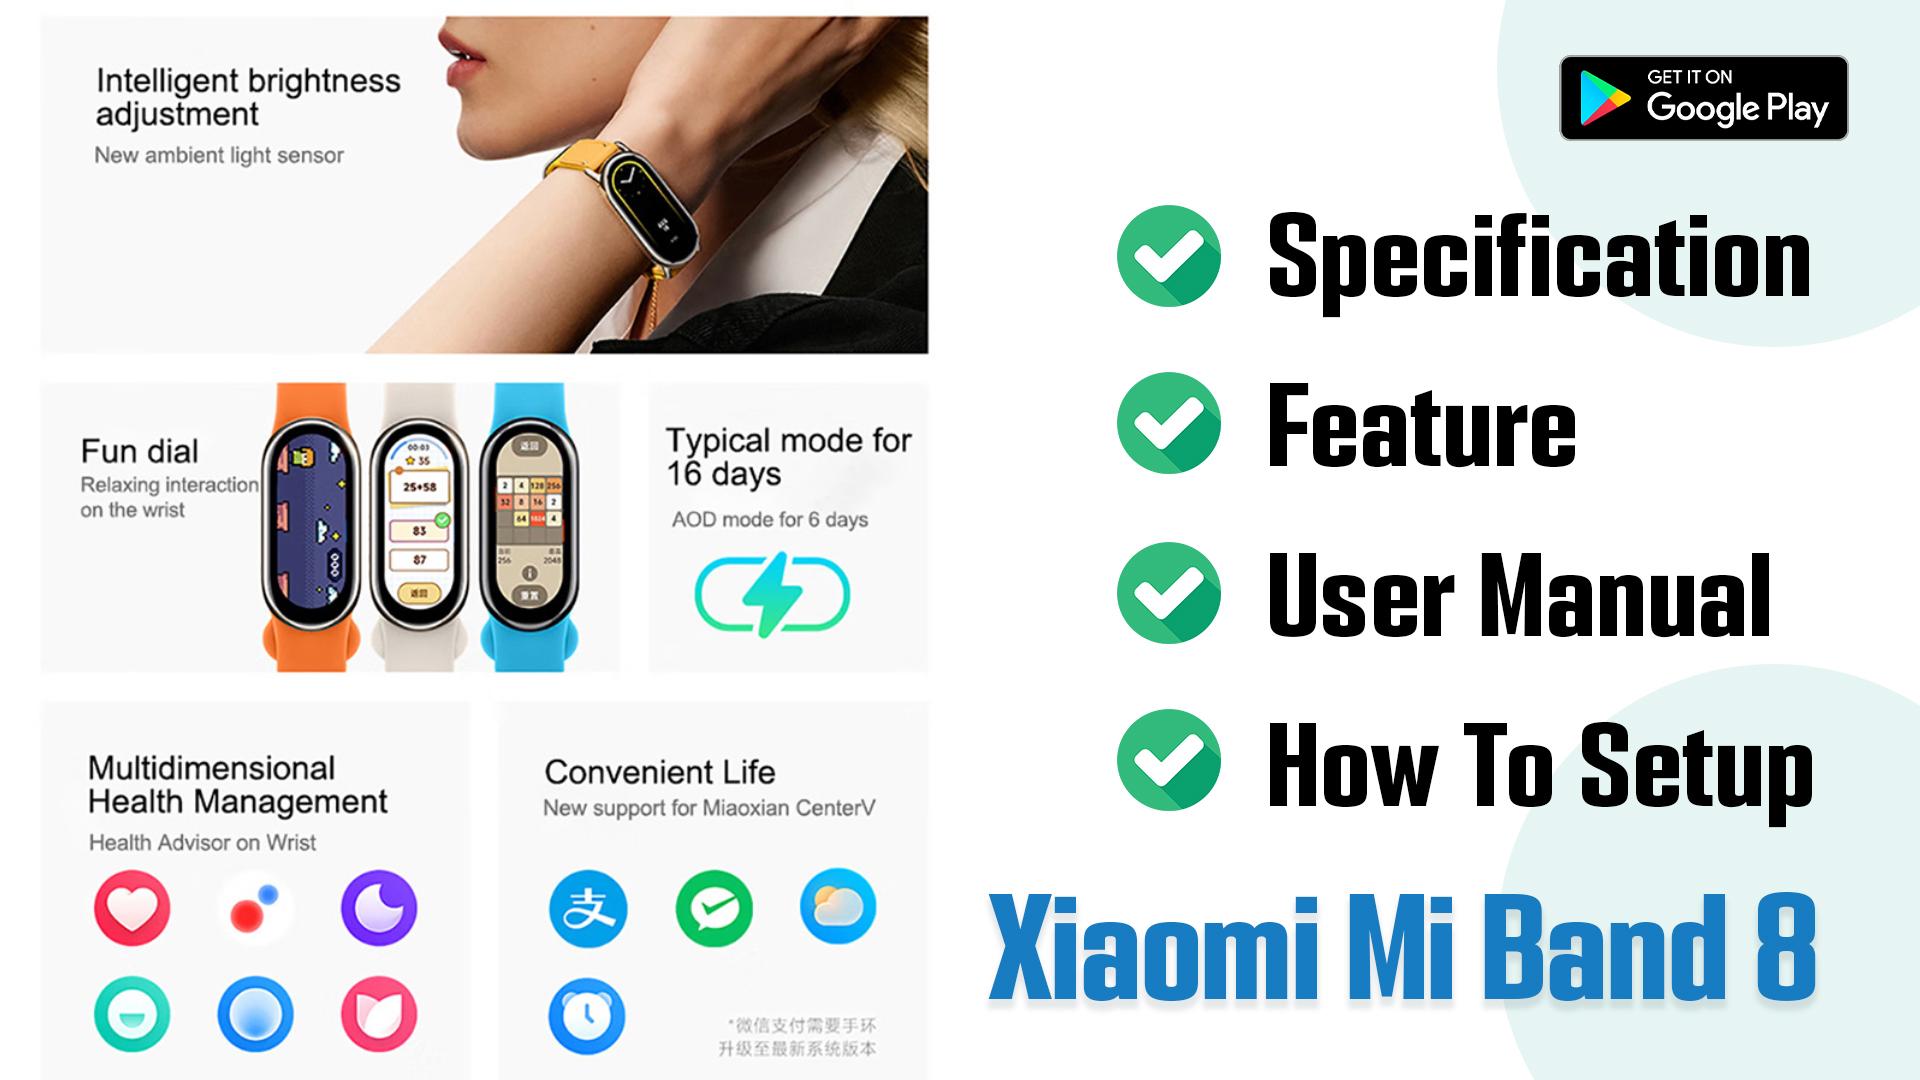 Xiaomi Mi Band 8 - How to Pair/Connect/Setup 